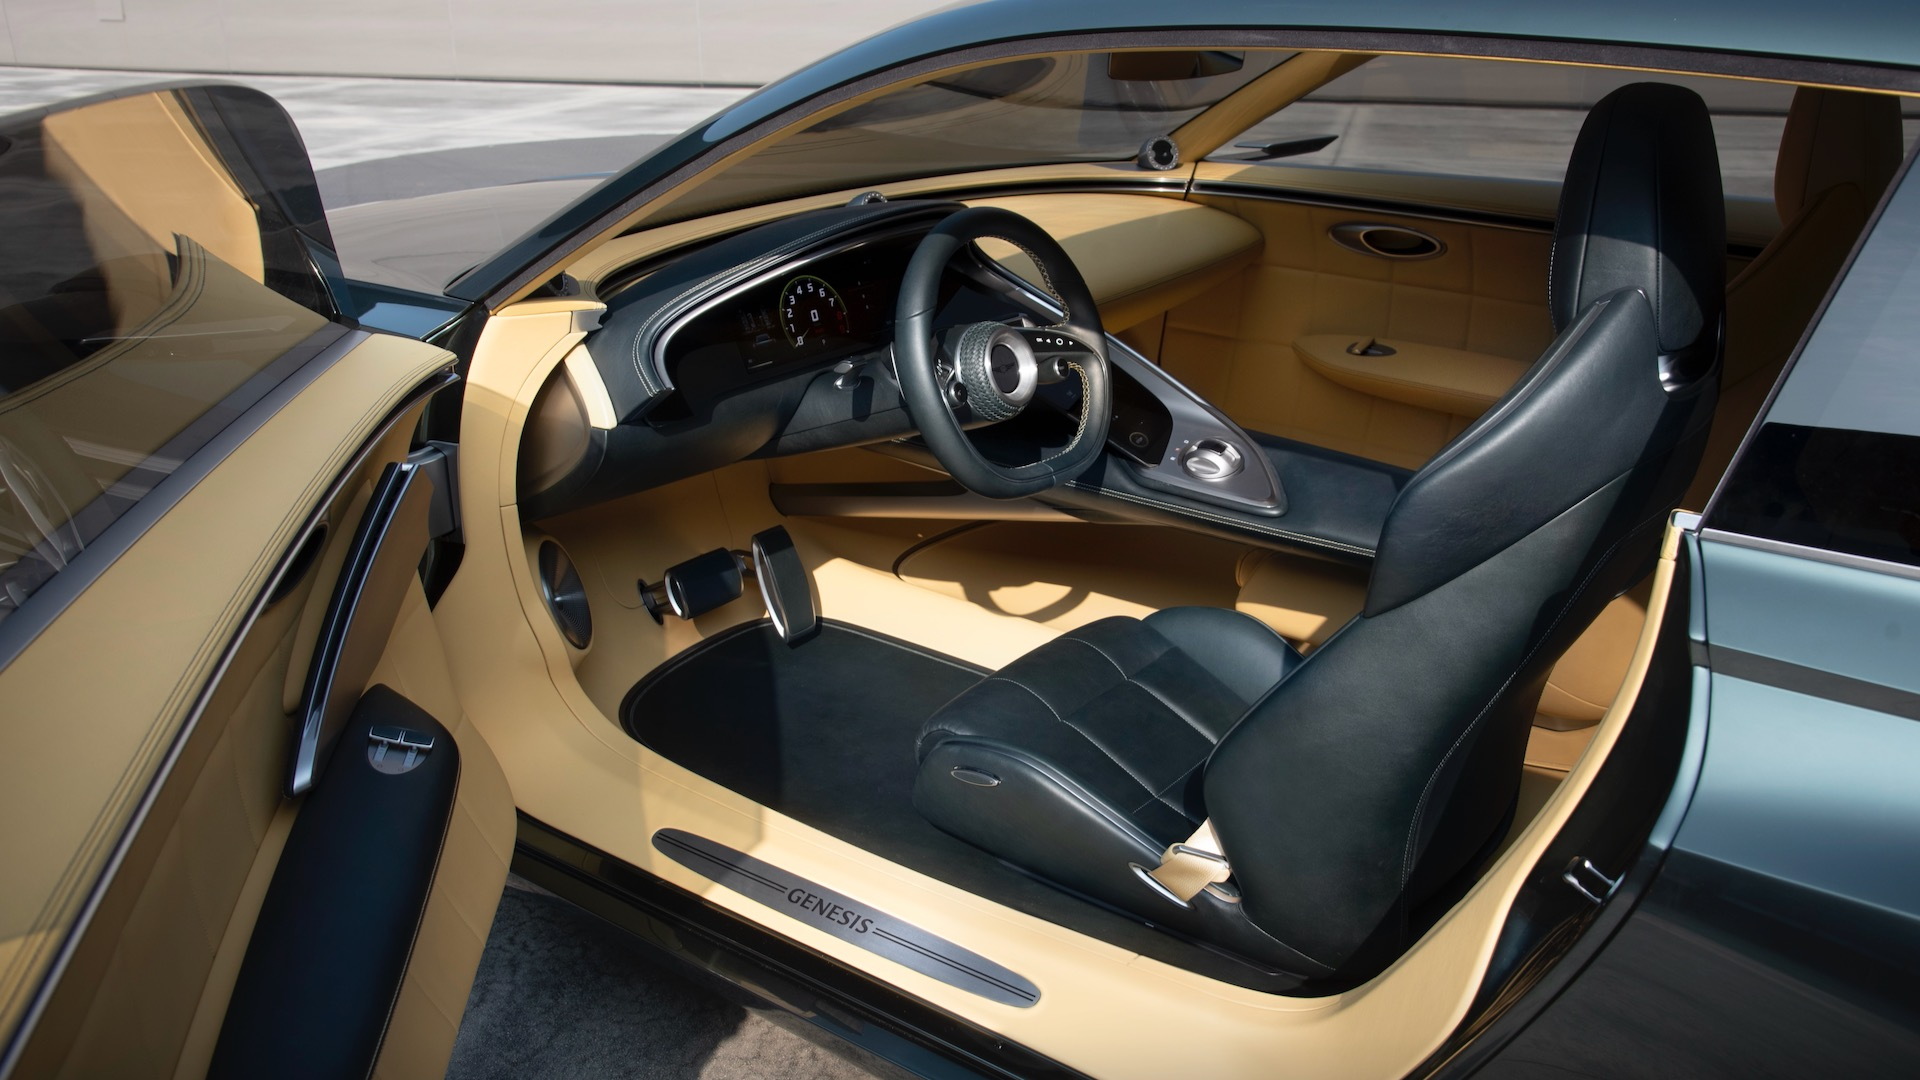 Genesis X Speedium Coupe concept